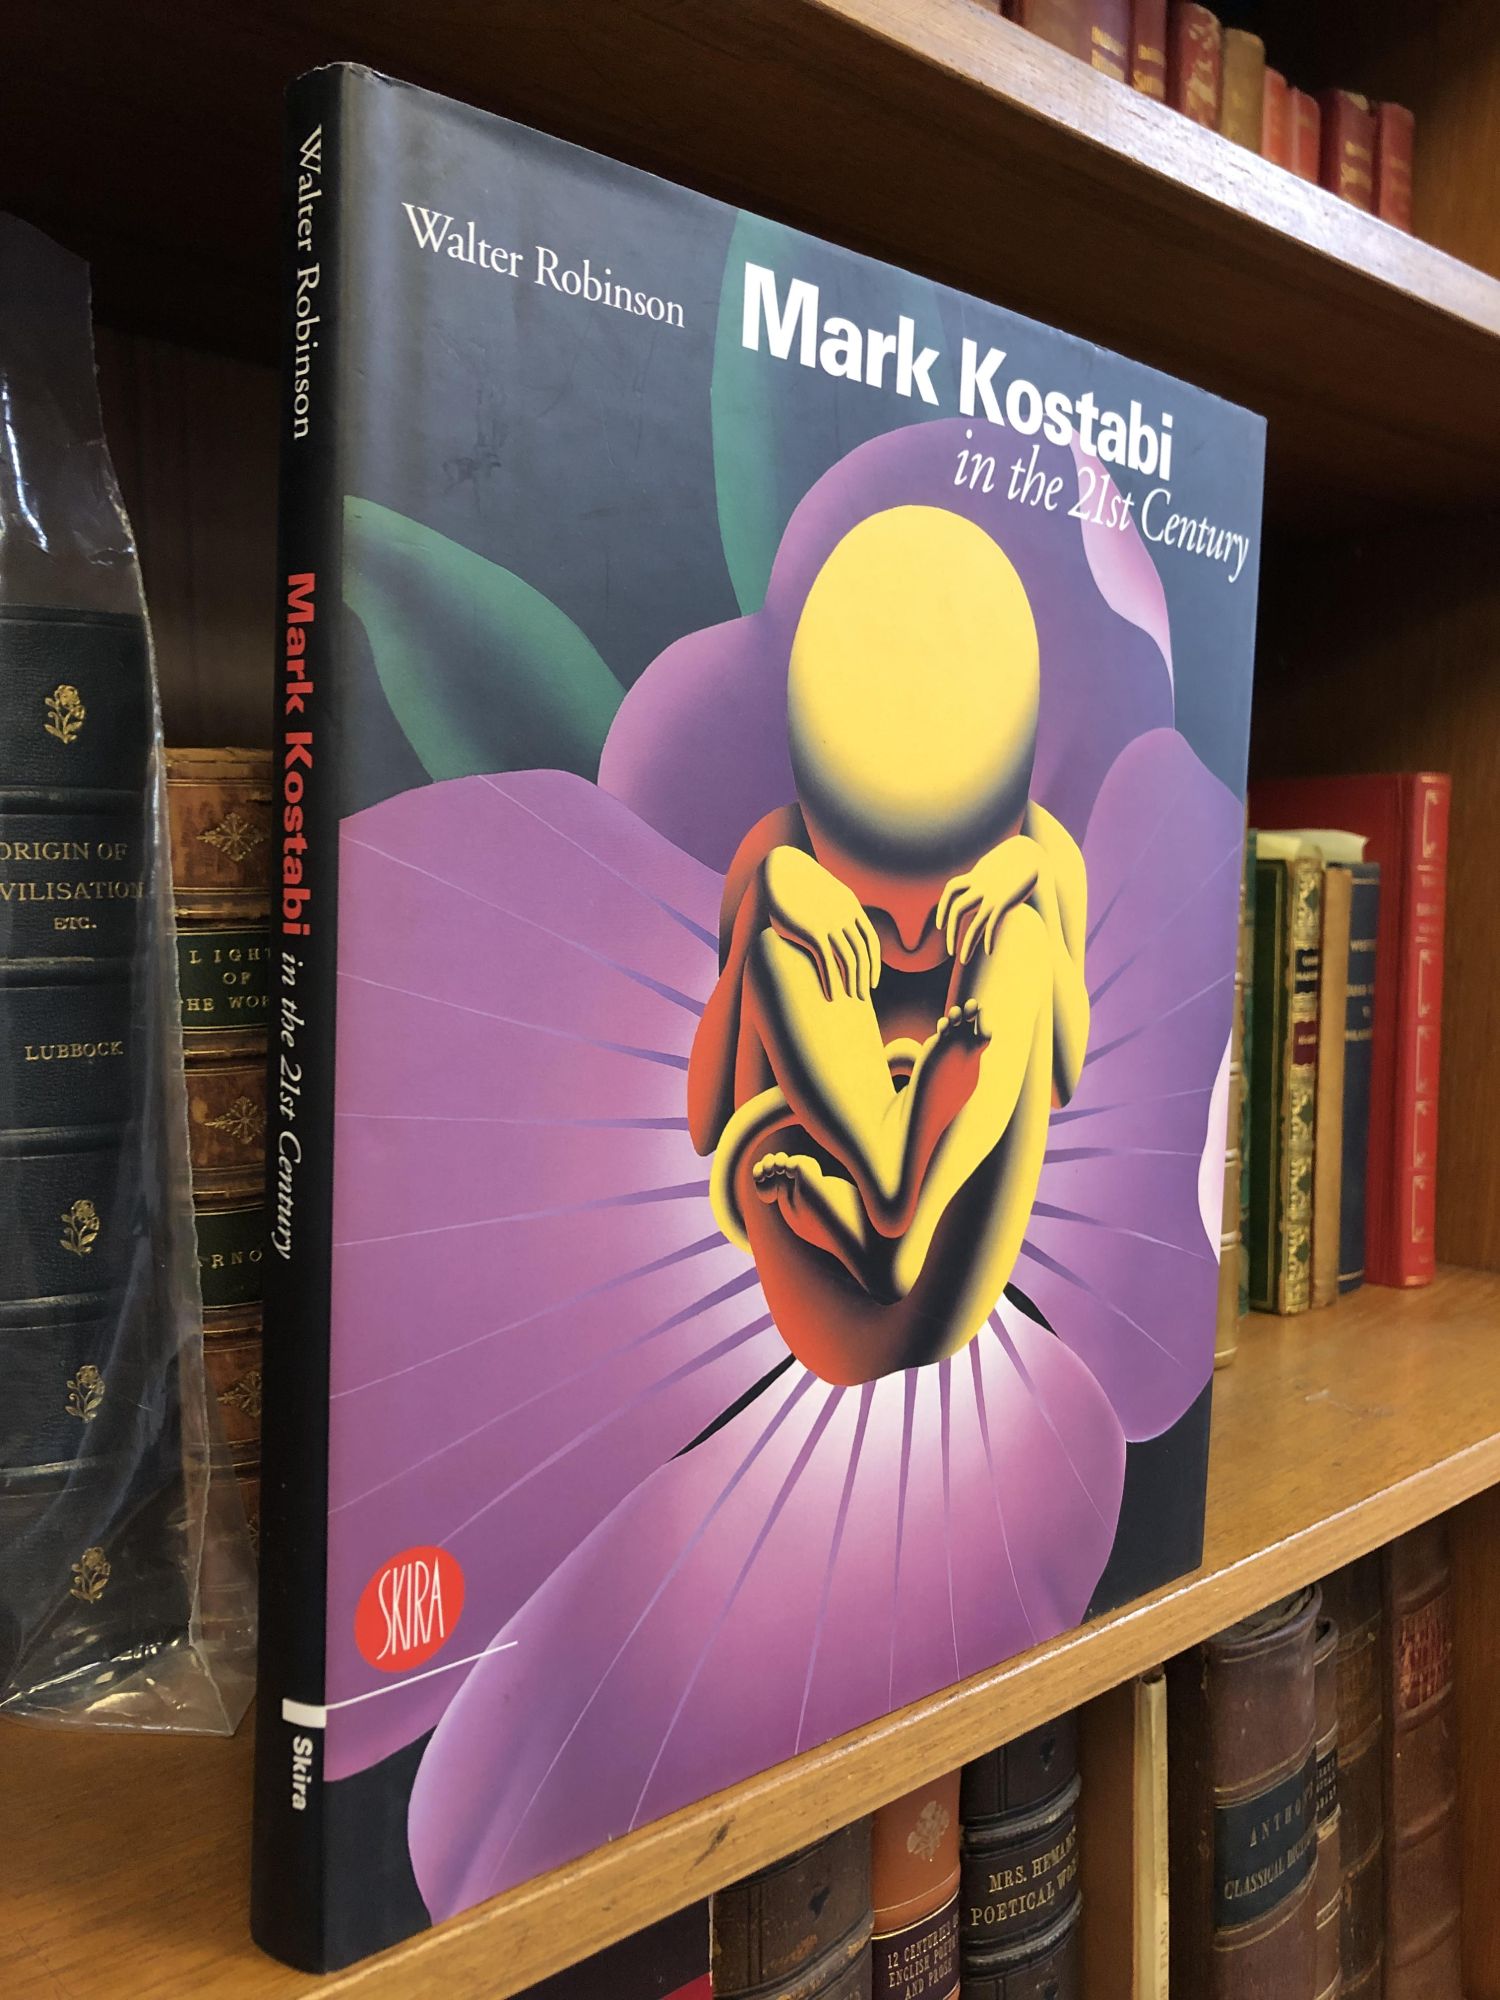 1354097 MARK KOSTABI IN THE 21ST CENTURY [SIGNED]. Mark Kostabi, Walter Robinson.